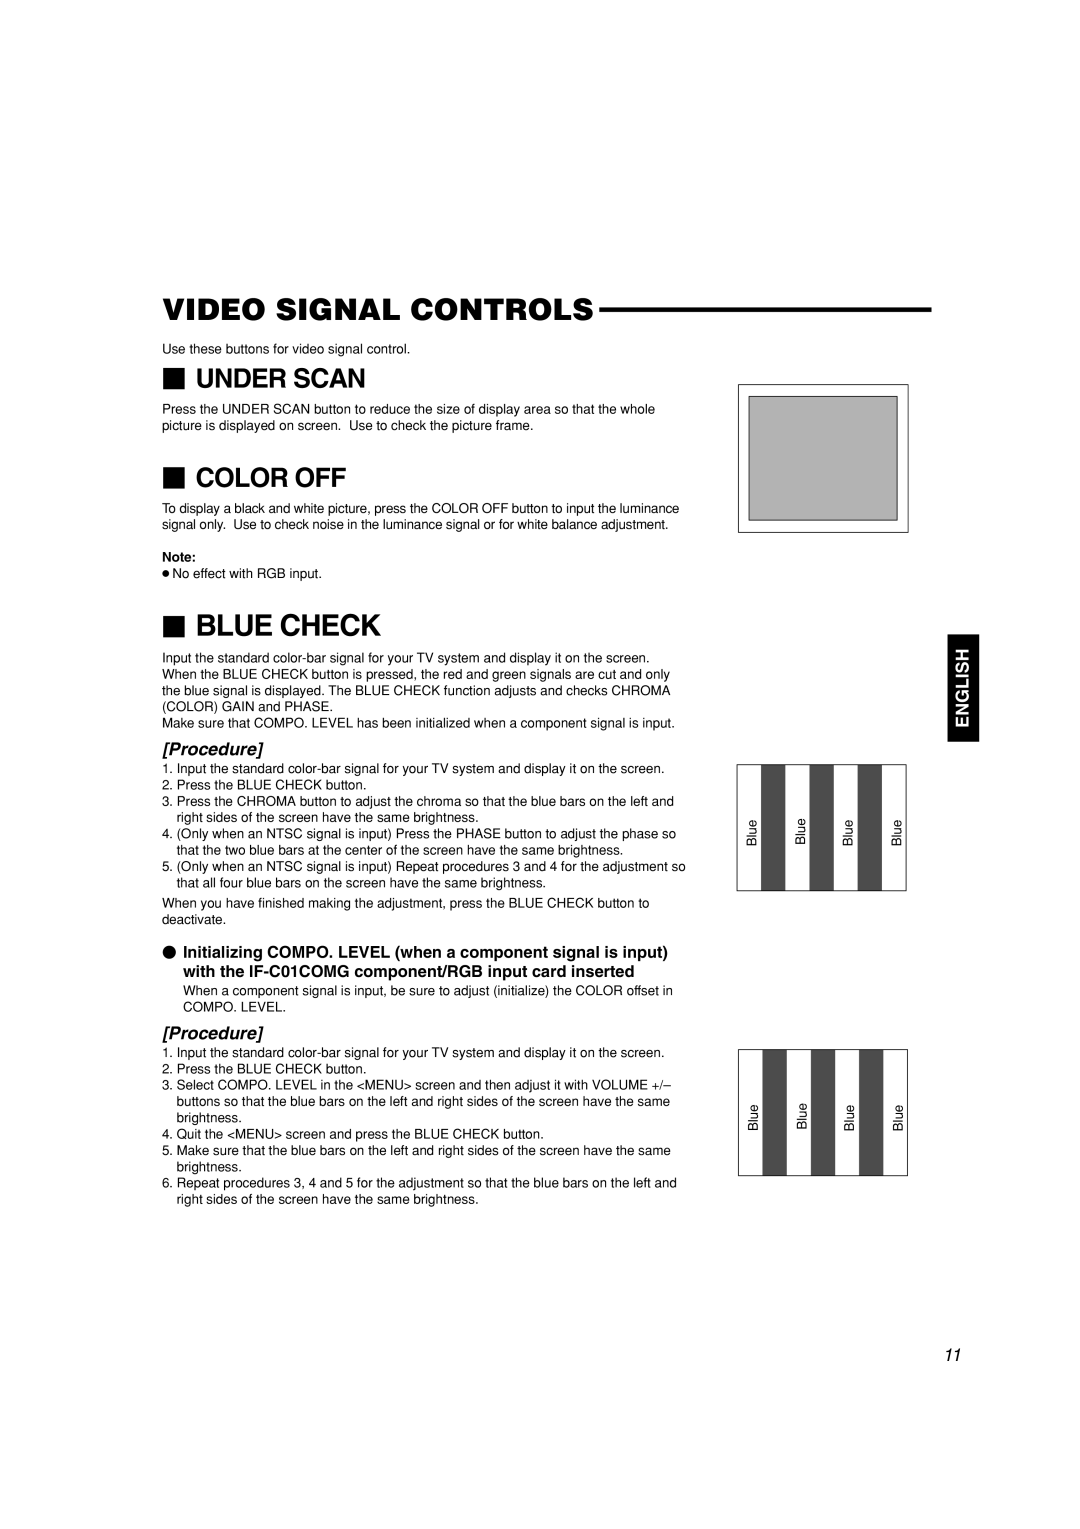 JVC TM-H1950CG Video Signal Controls,  Blue Check, Use these buttons for video signal control, No effect with RGB input 